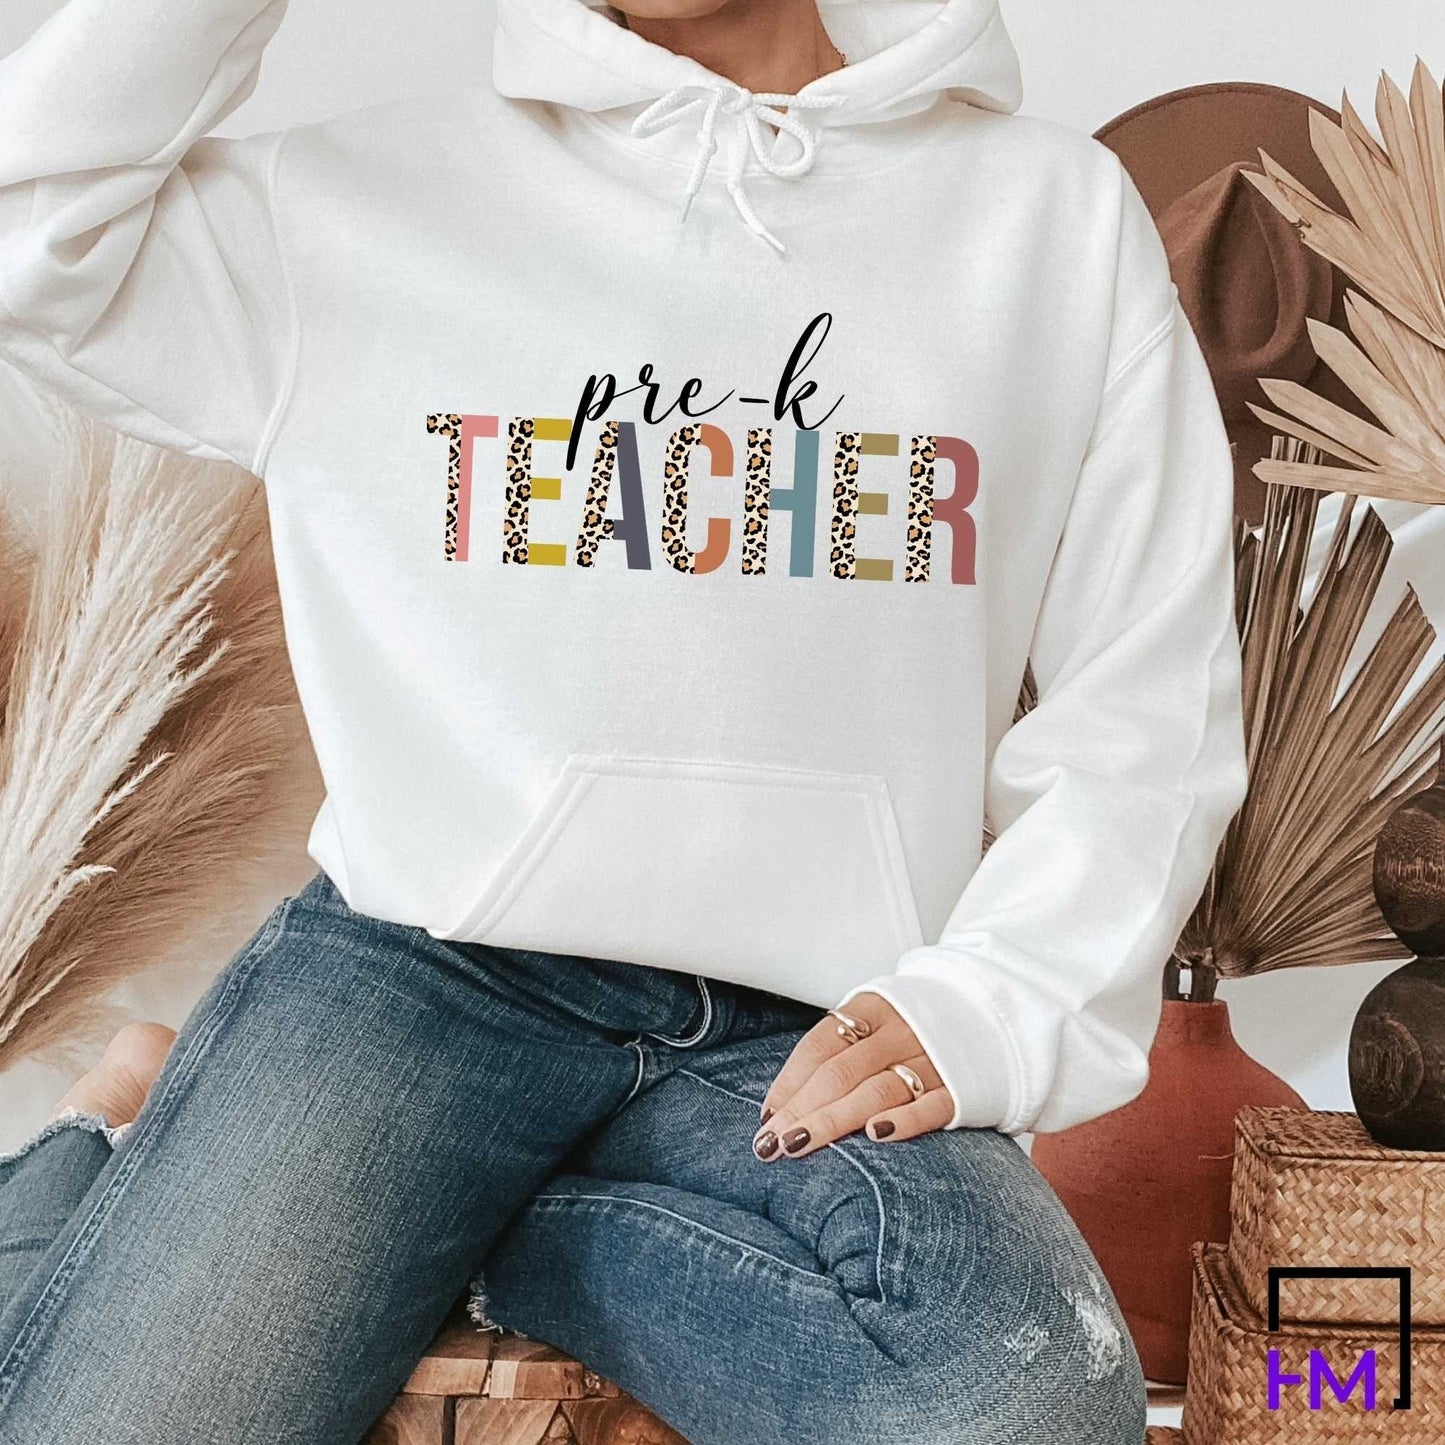 Pre-K Teacher Shirt